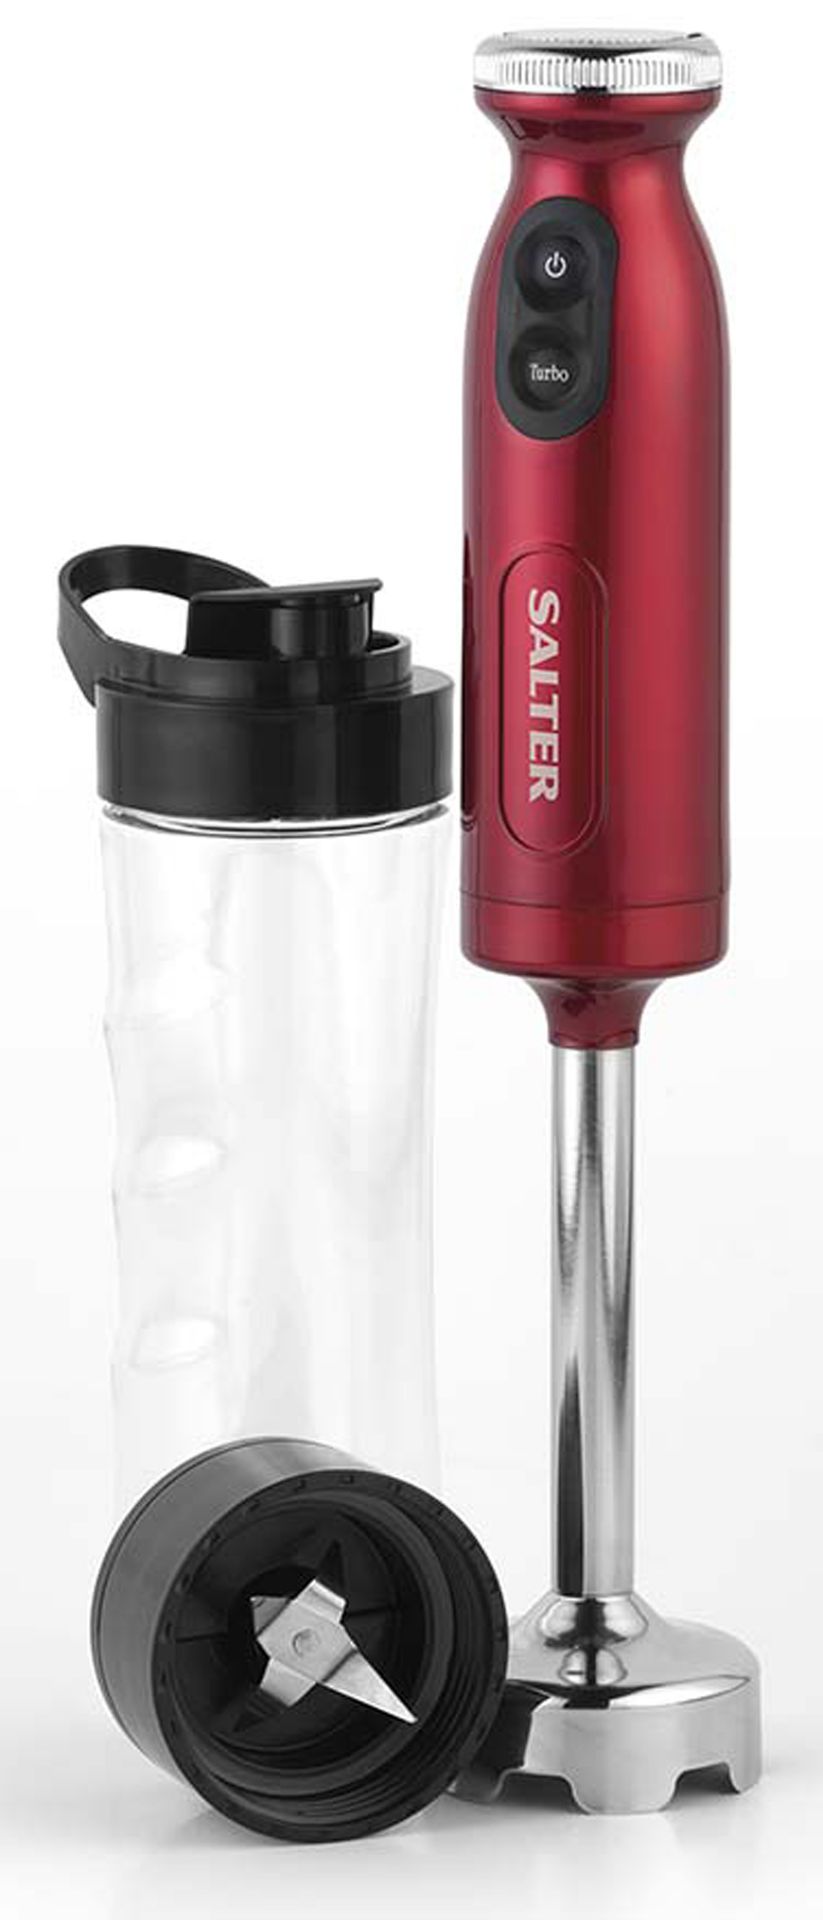 V Brand New Salter NutriTwist Stick Blender With 500watt Motor - Adjustable Speed - Stainless - Image 2 of 2